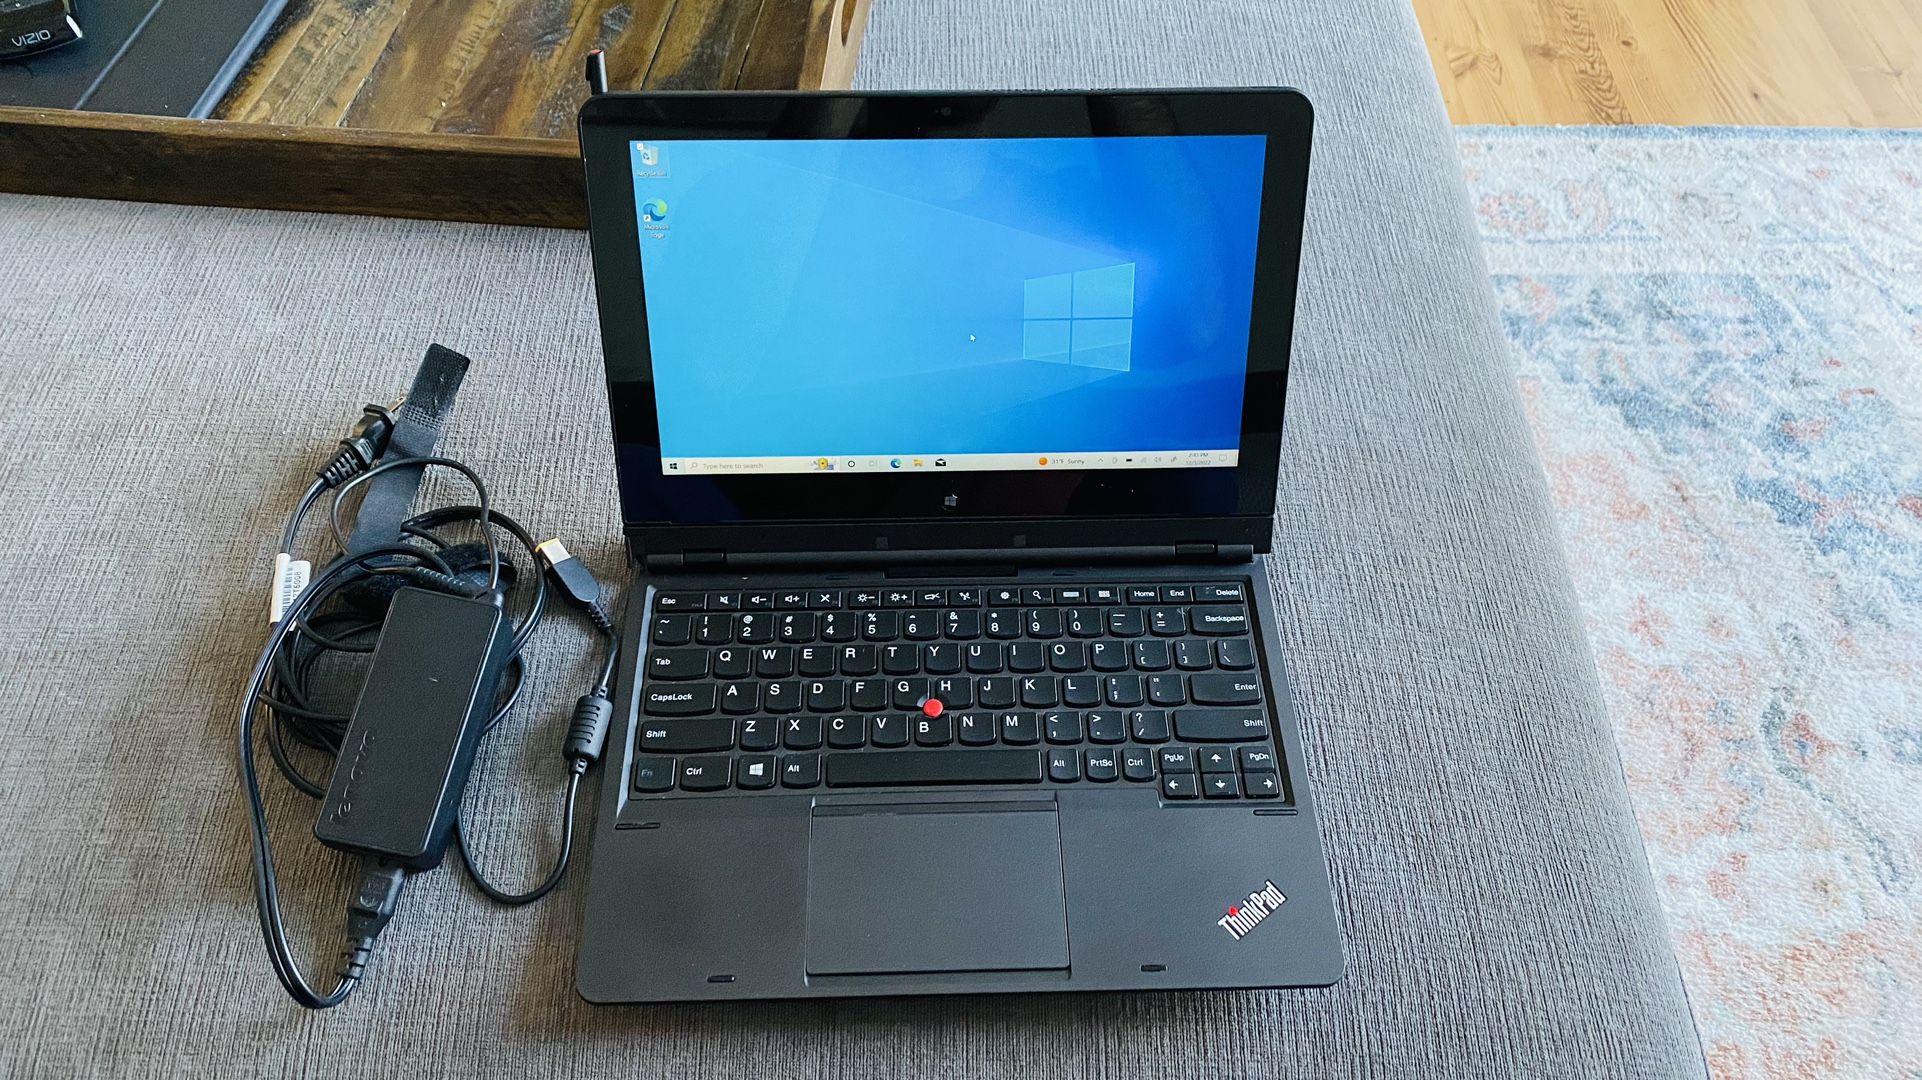 Lenovo ThinkPad Helix Touch 11.6” Core i7-3667u